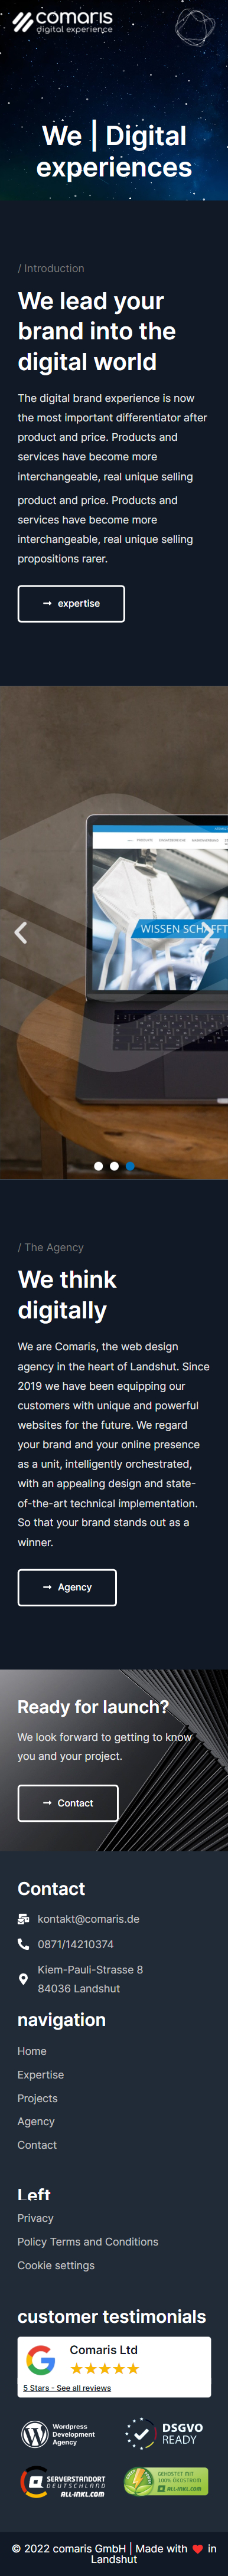 Comaris GmbH | Digital Experience Design Agencies Web & Interactive